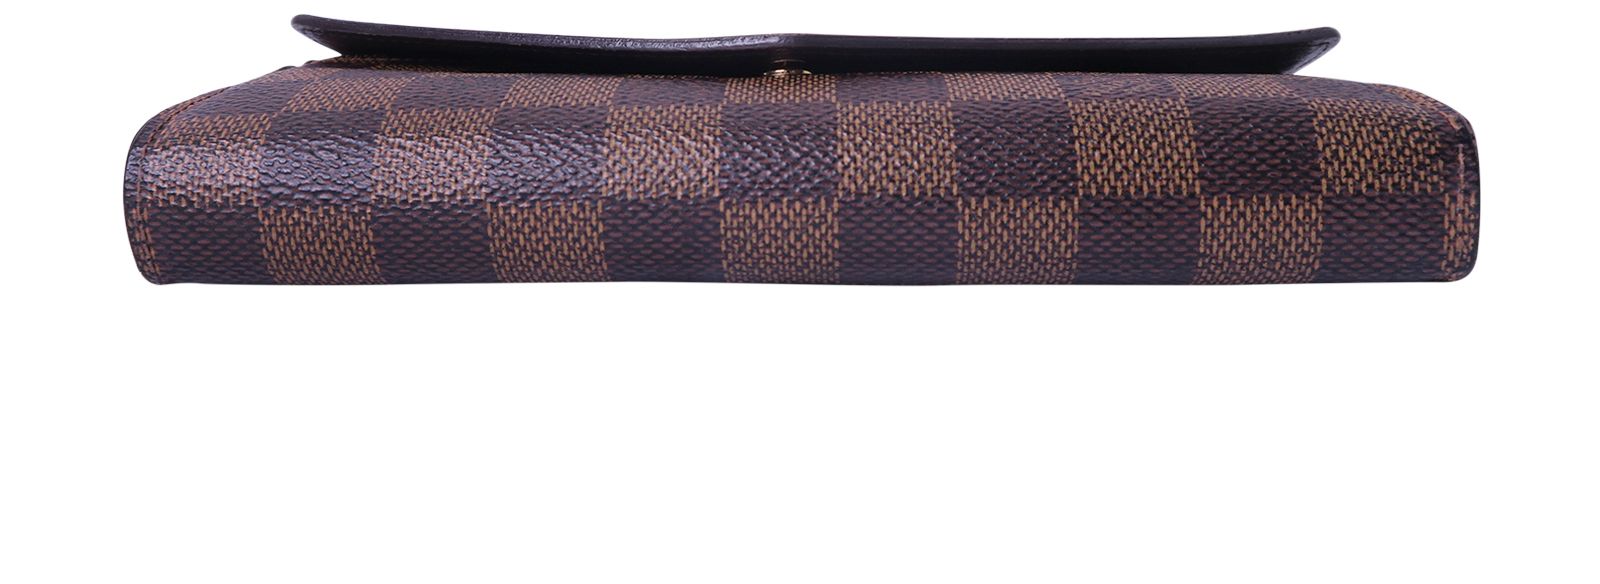 Louis Vuitton Sarah Small leather goods 291270